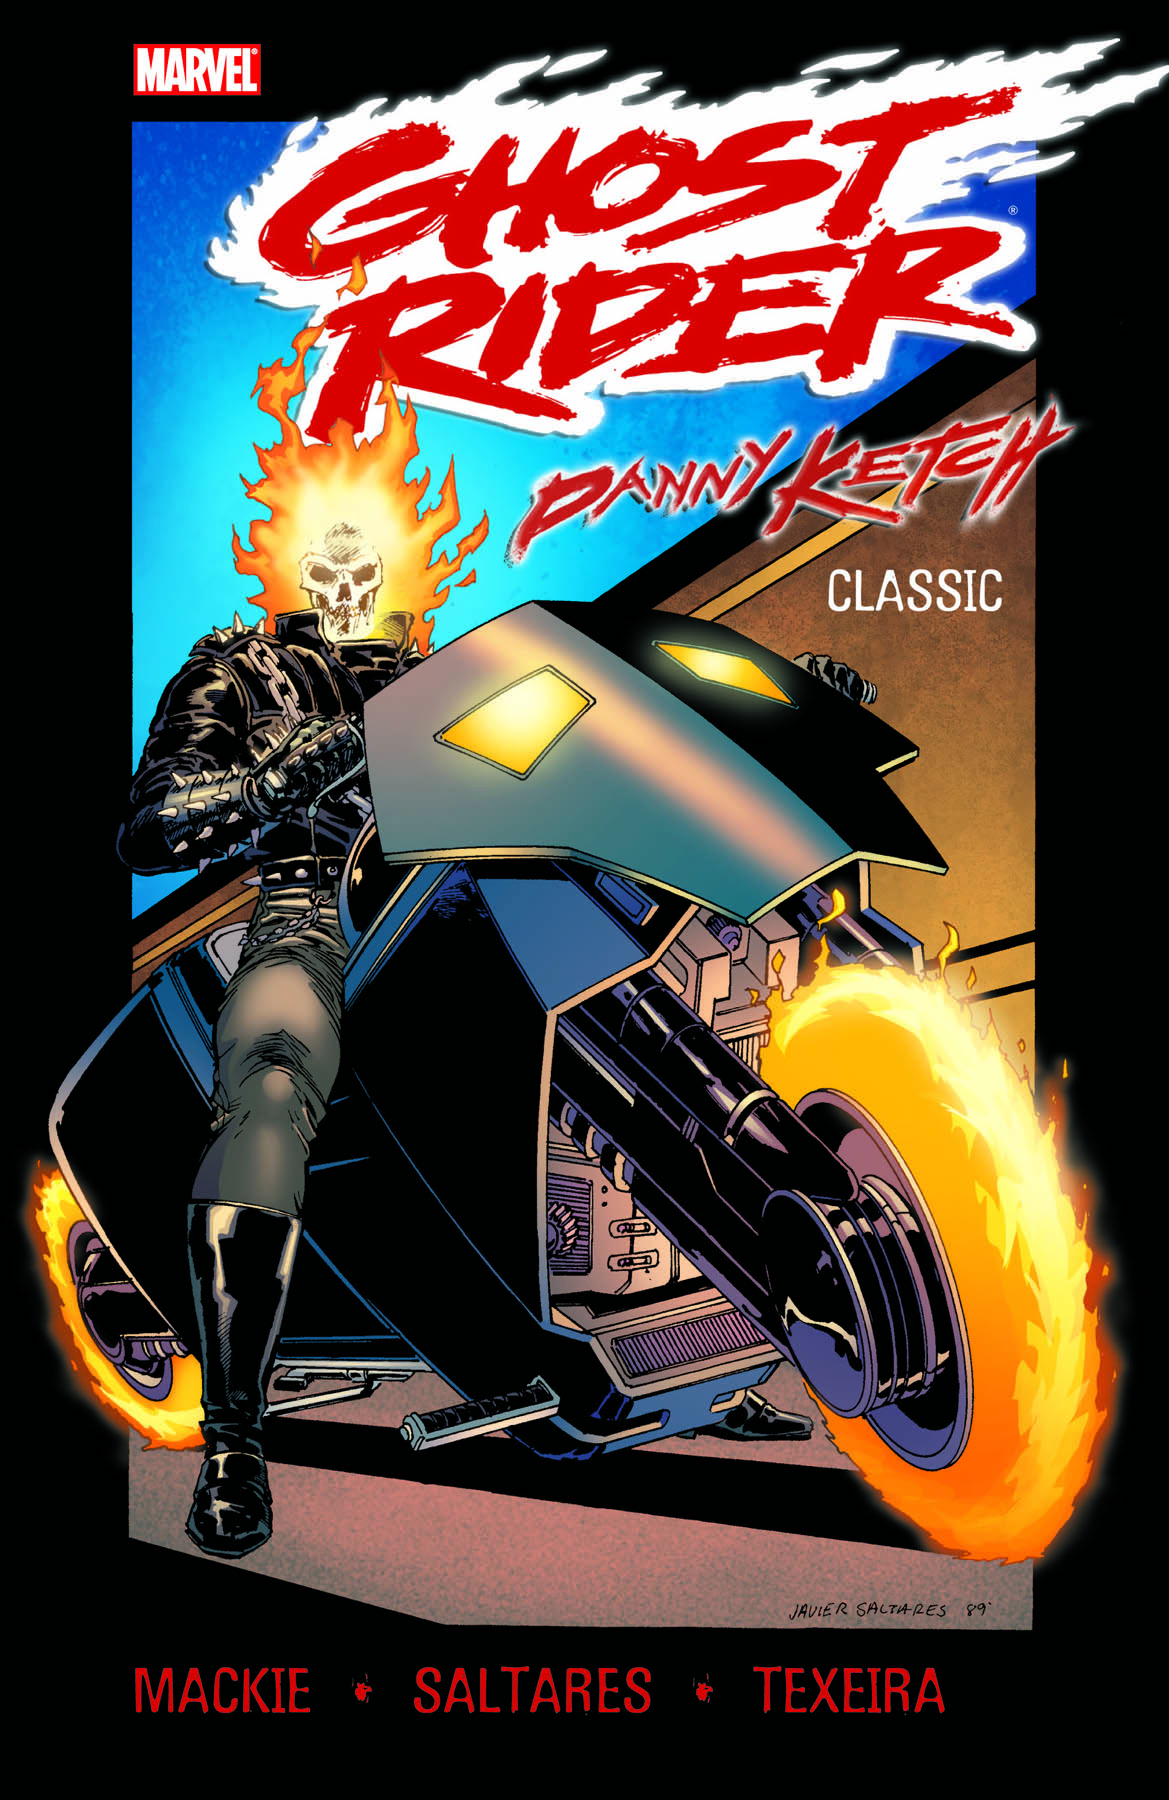 Ghost Rider: Danny Ketch Classic Vol. 1 (Trade Paperback)